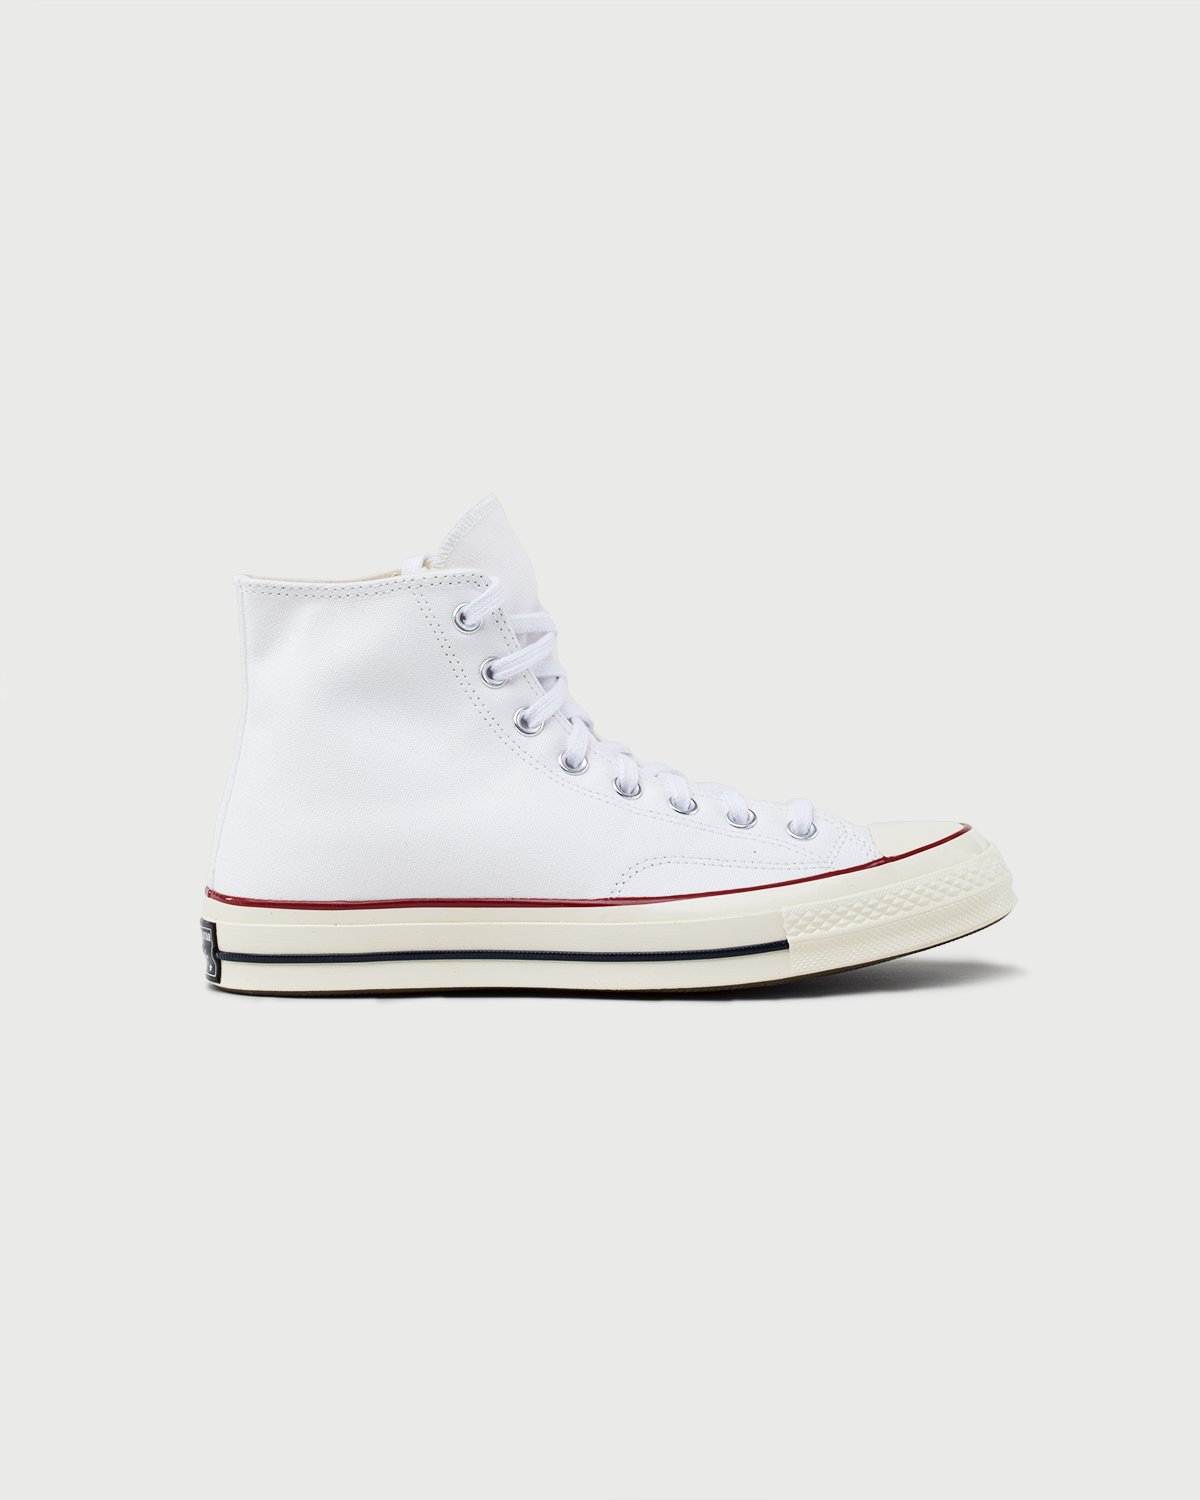 Converse - Chuck 70 Hi White - Footwear - White - Image 1